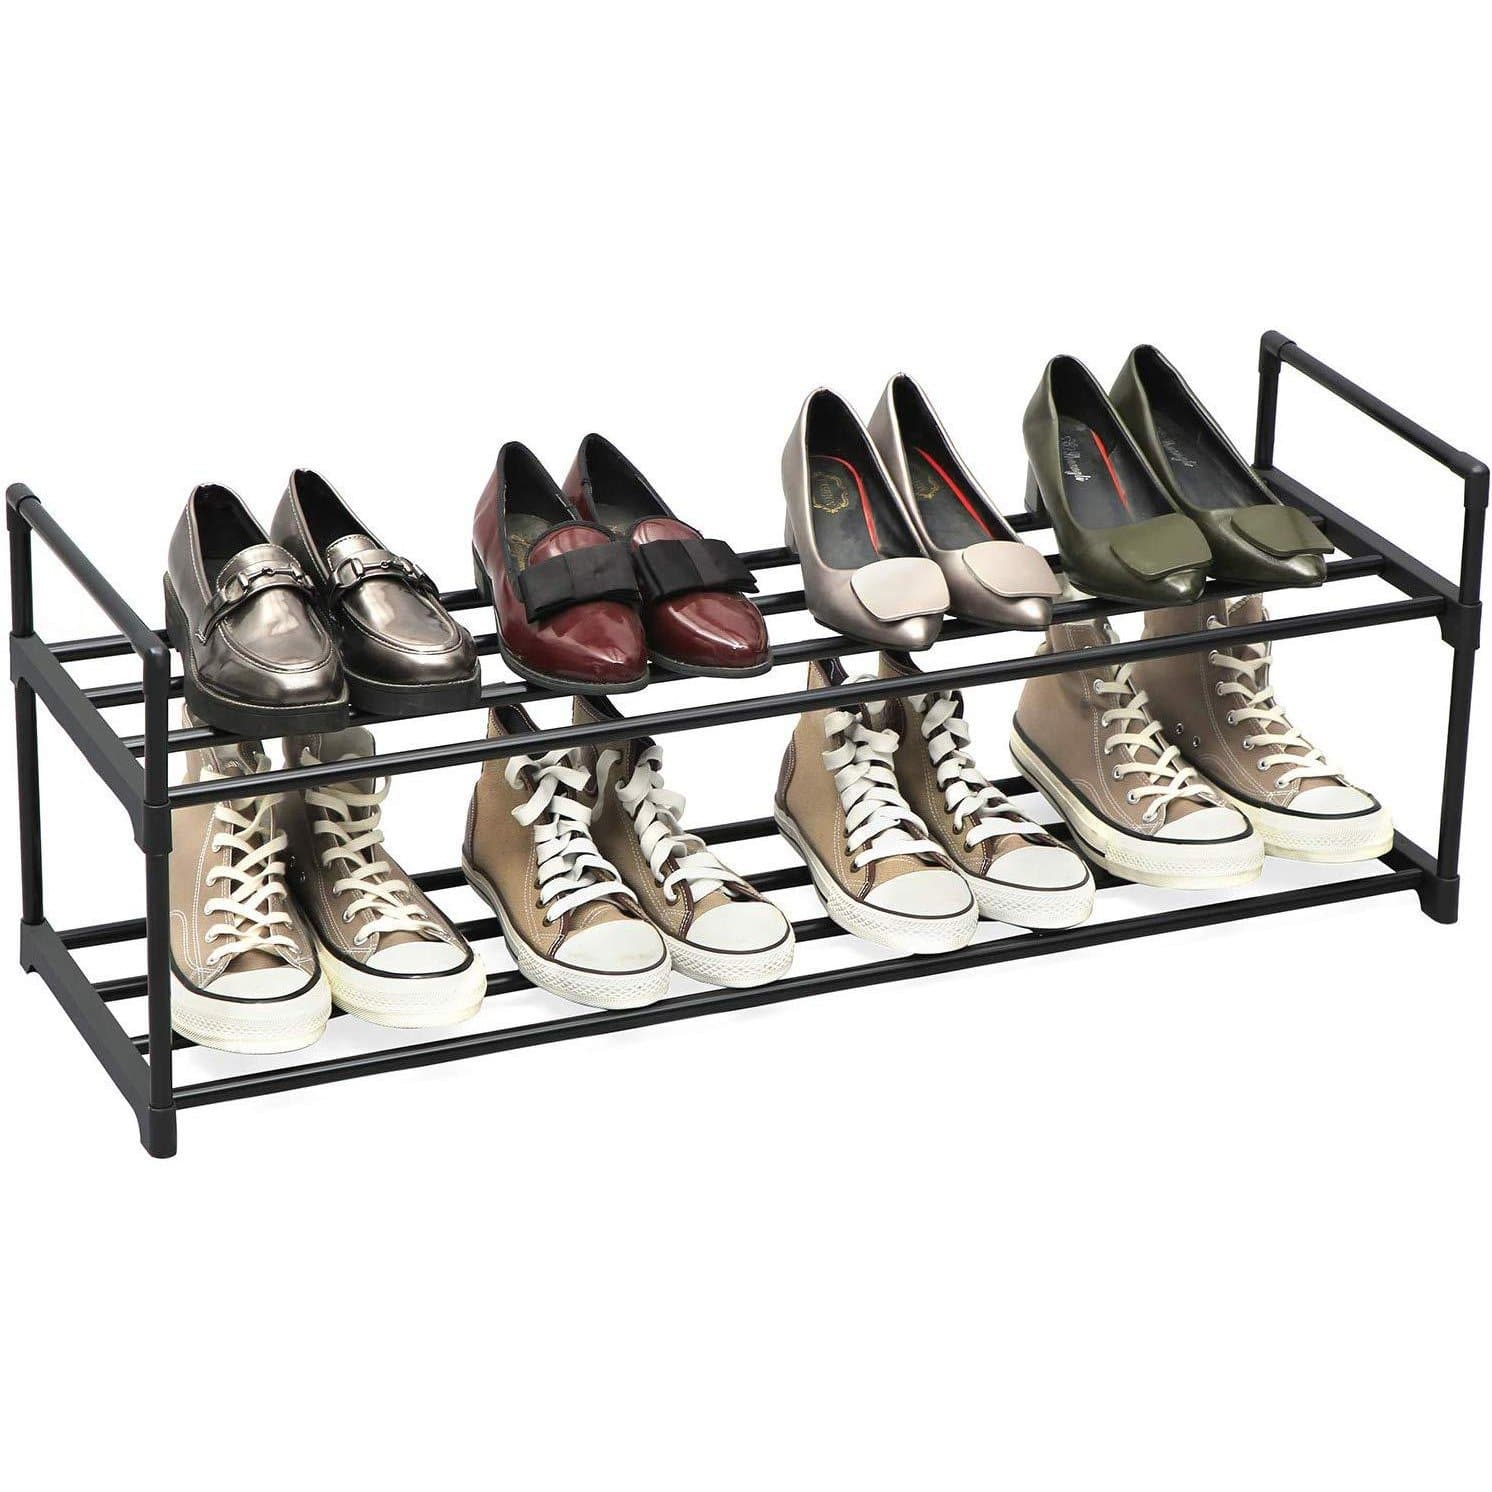 Nancy's Shoe Rack – Shoe Cabinet - Shoe Racks - For 10 Pairs of Shoes